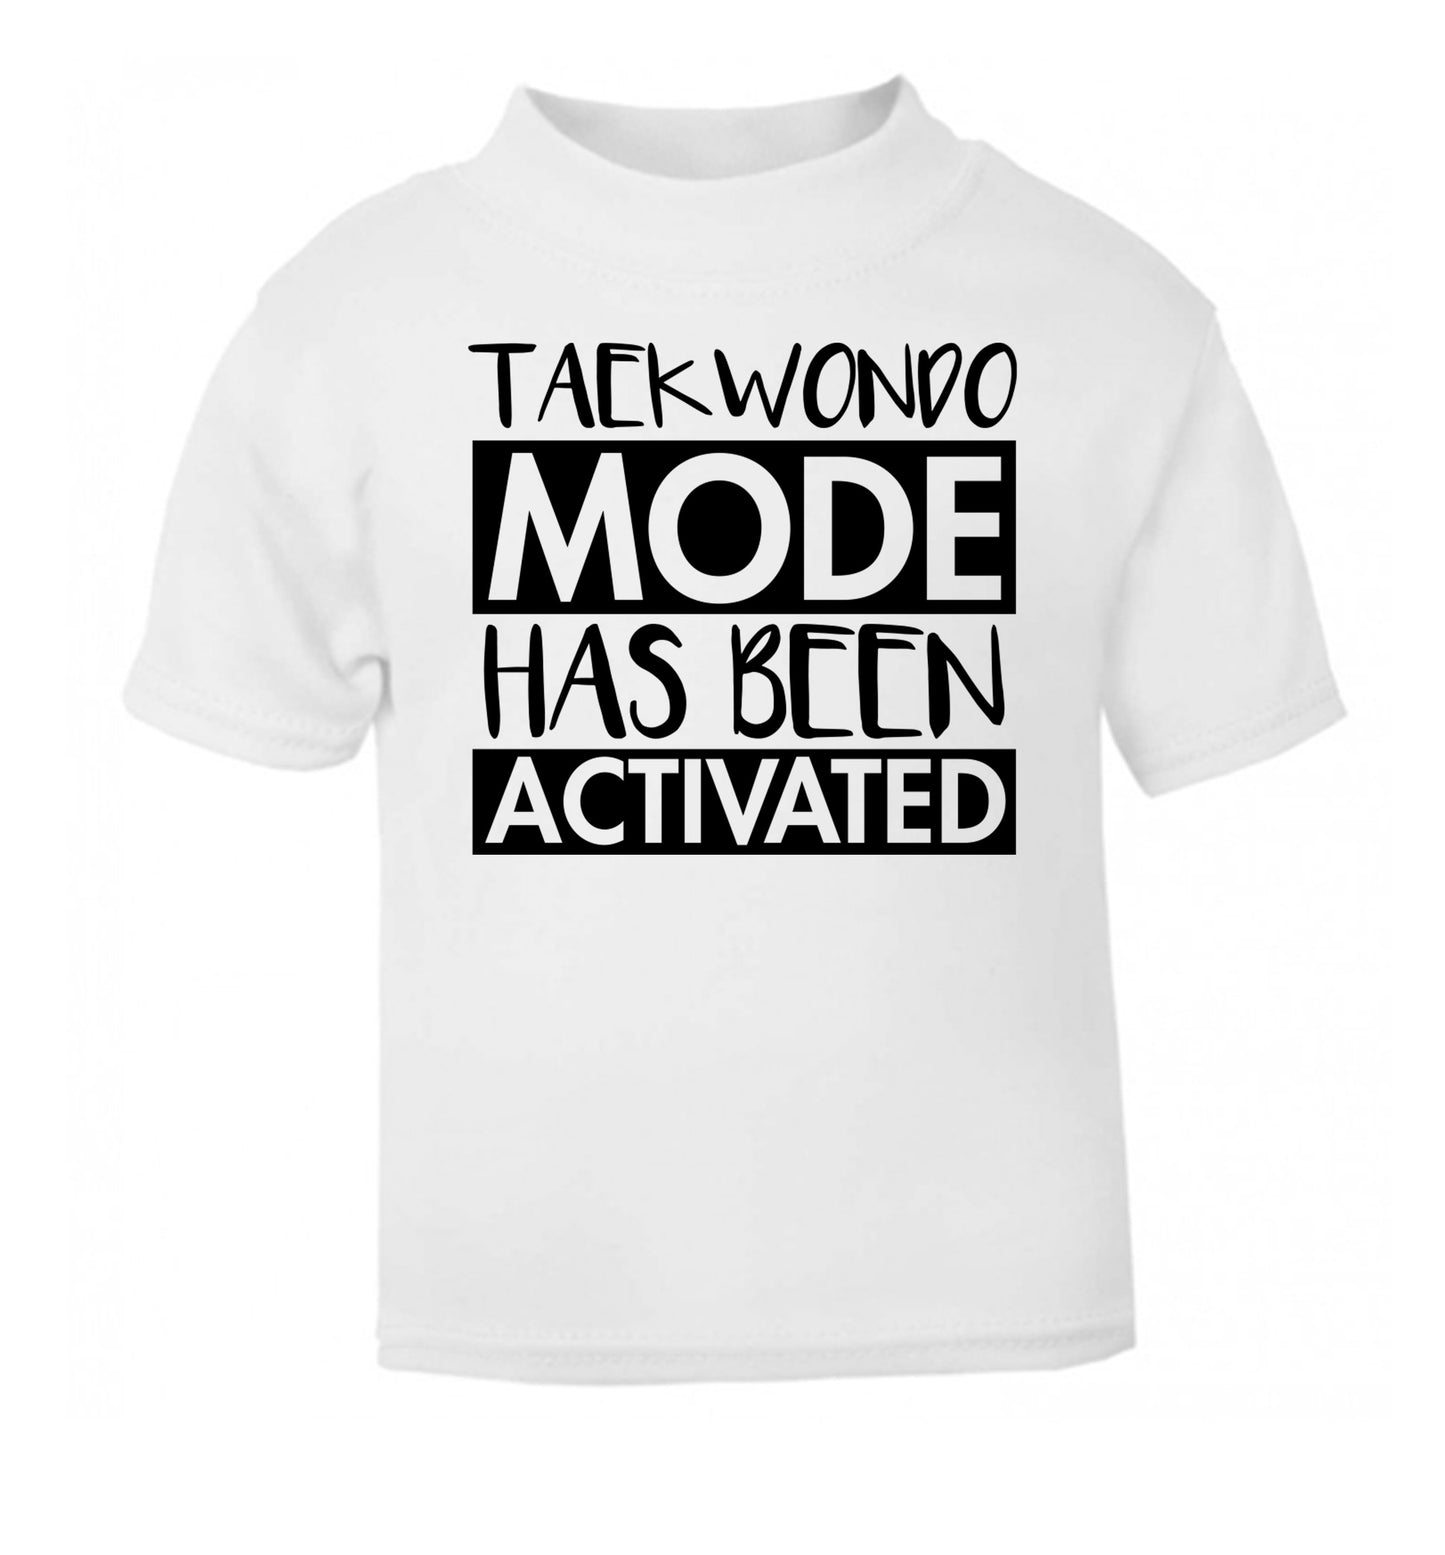 Taekwondo mode activated white Baby Toddler Tshirt 2 Years